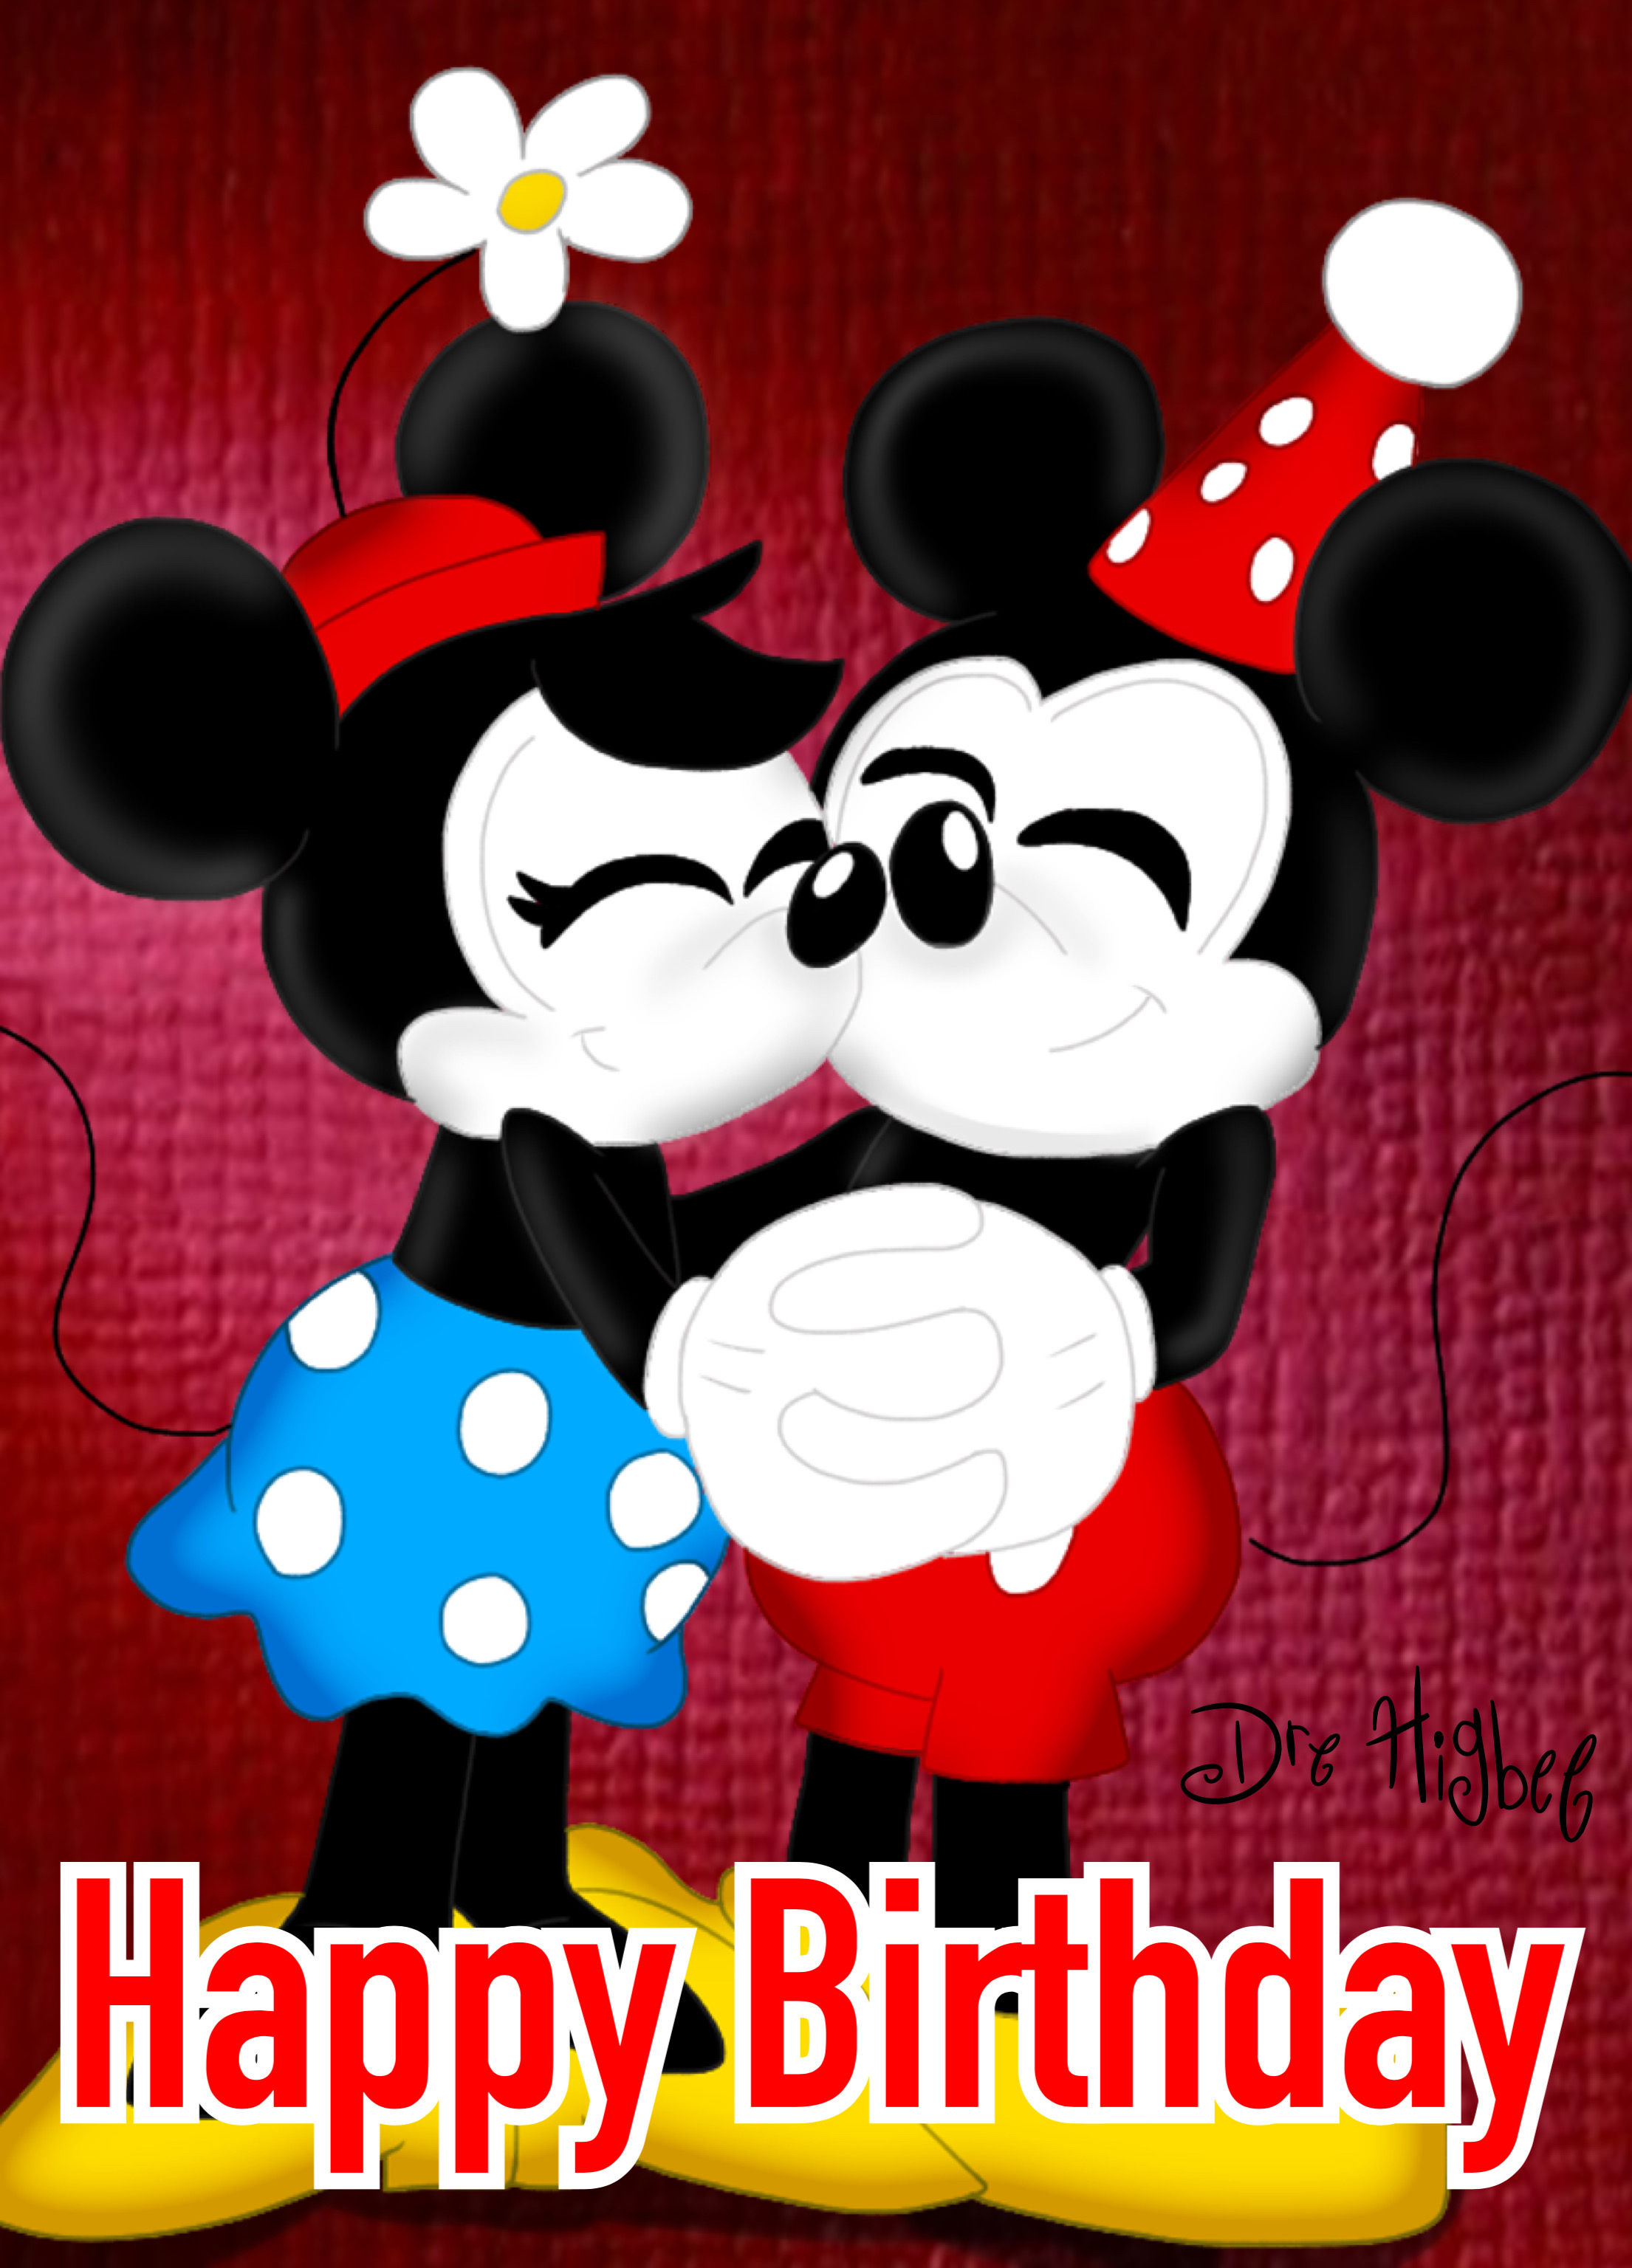 Happy Birthday Mickey and Minnie by mcdnalds2016 on DeviantArt